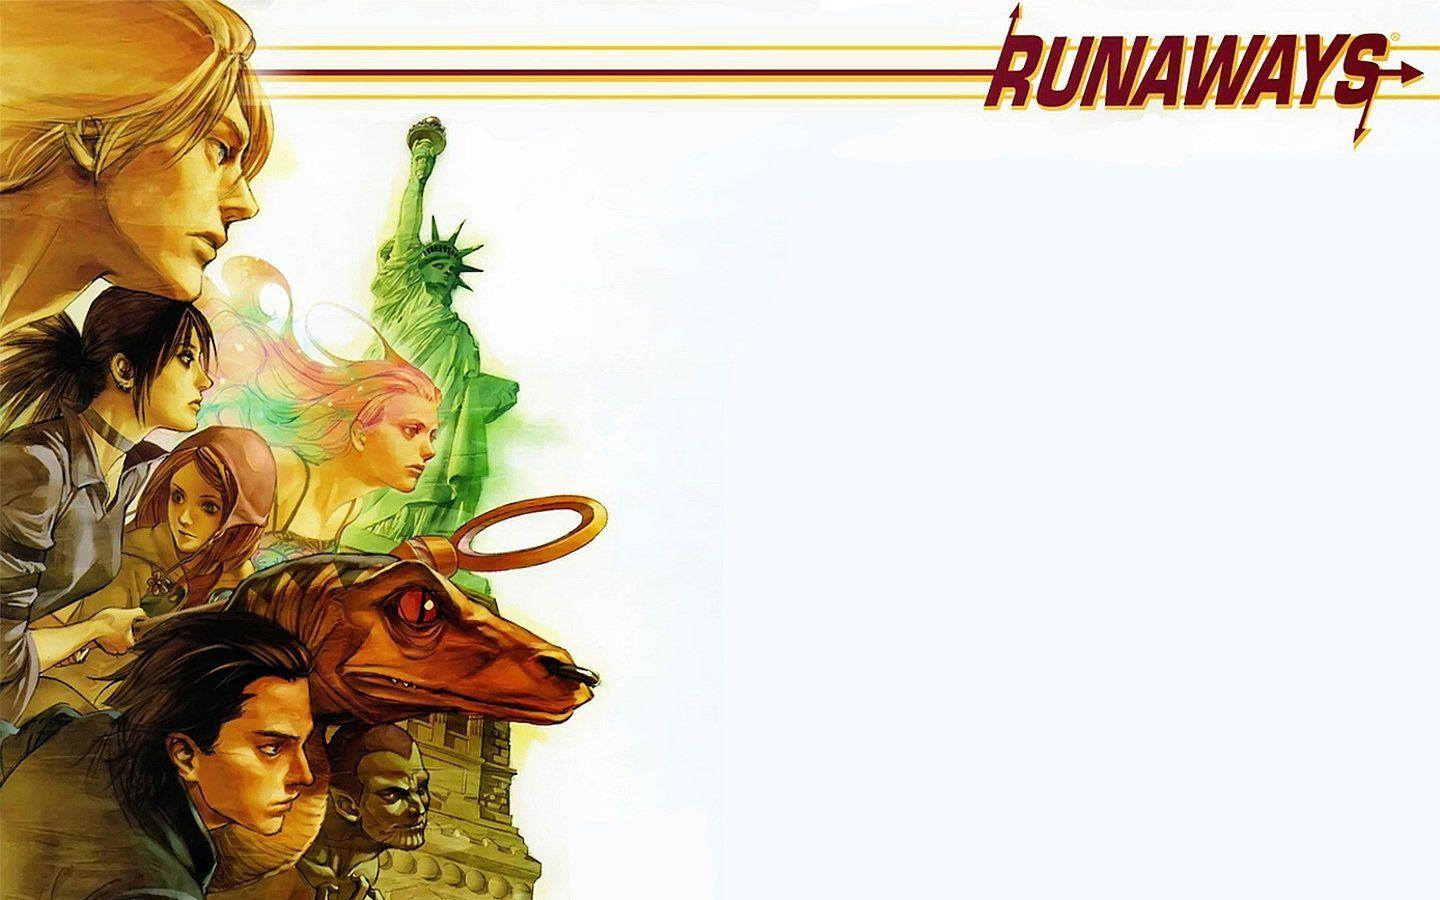 Runaways Wallpaper and Background Imagex900